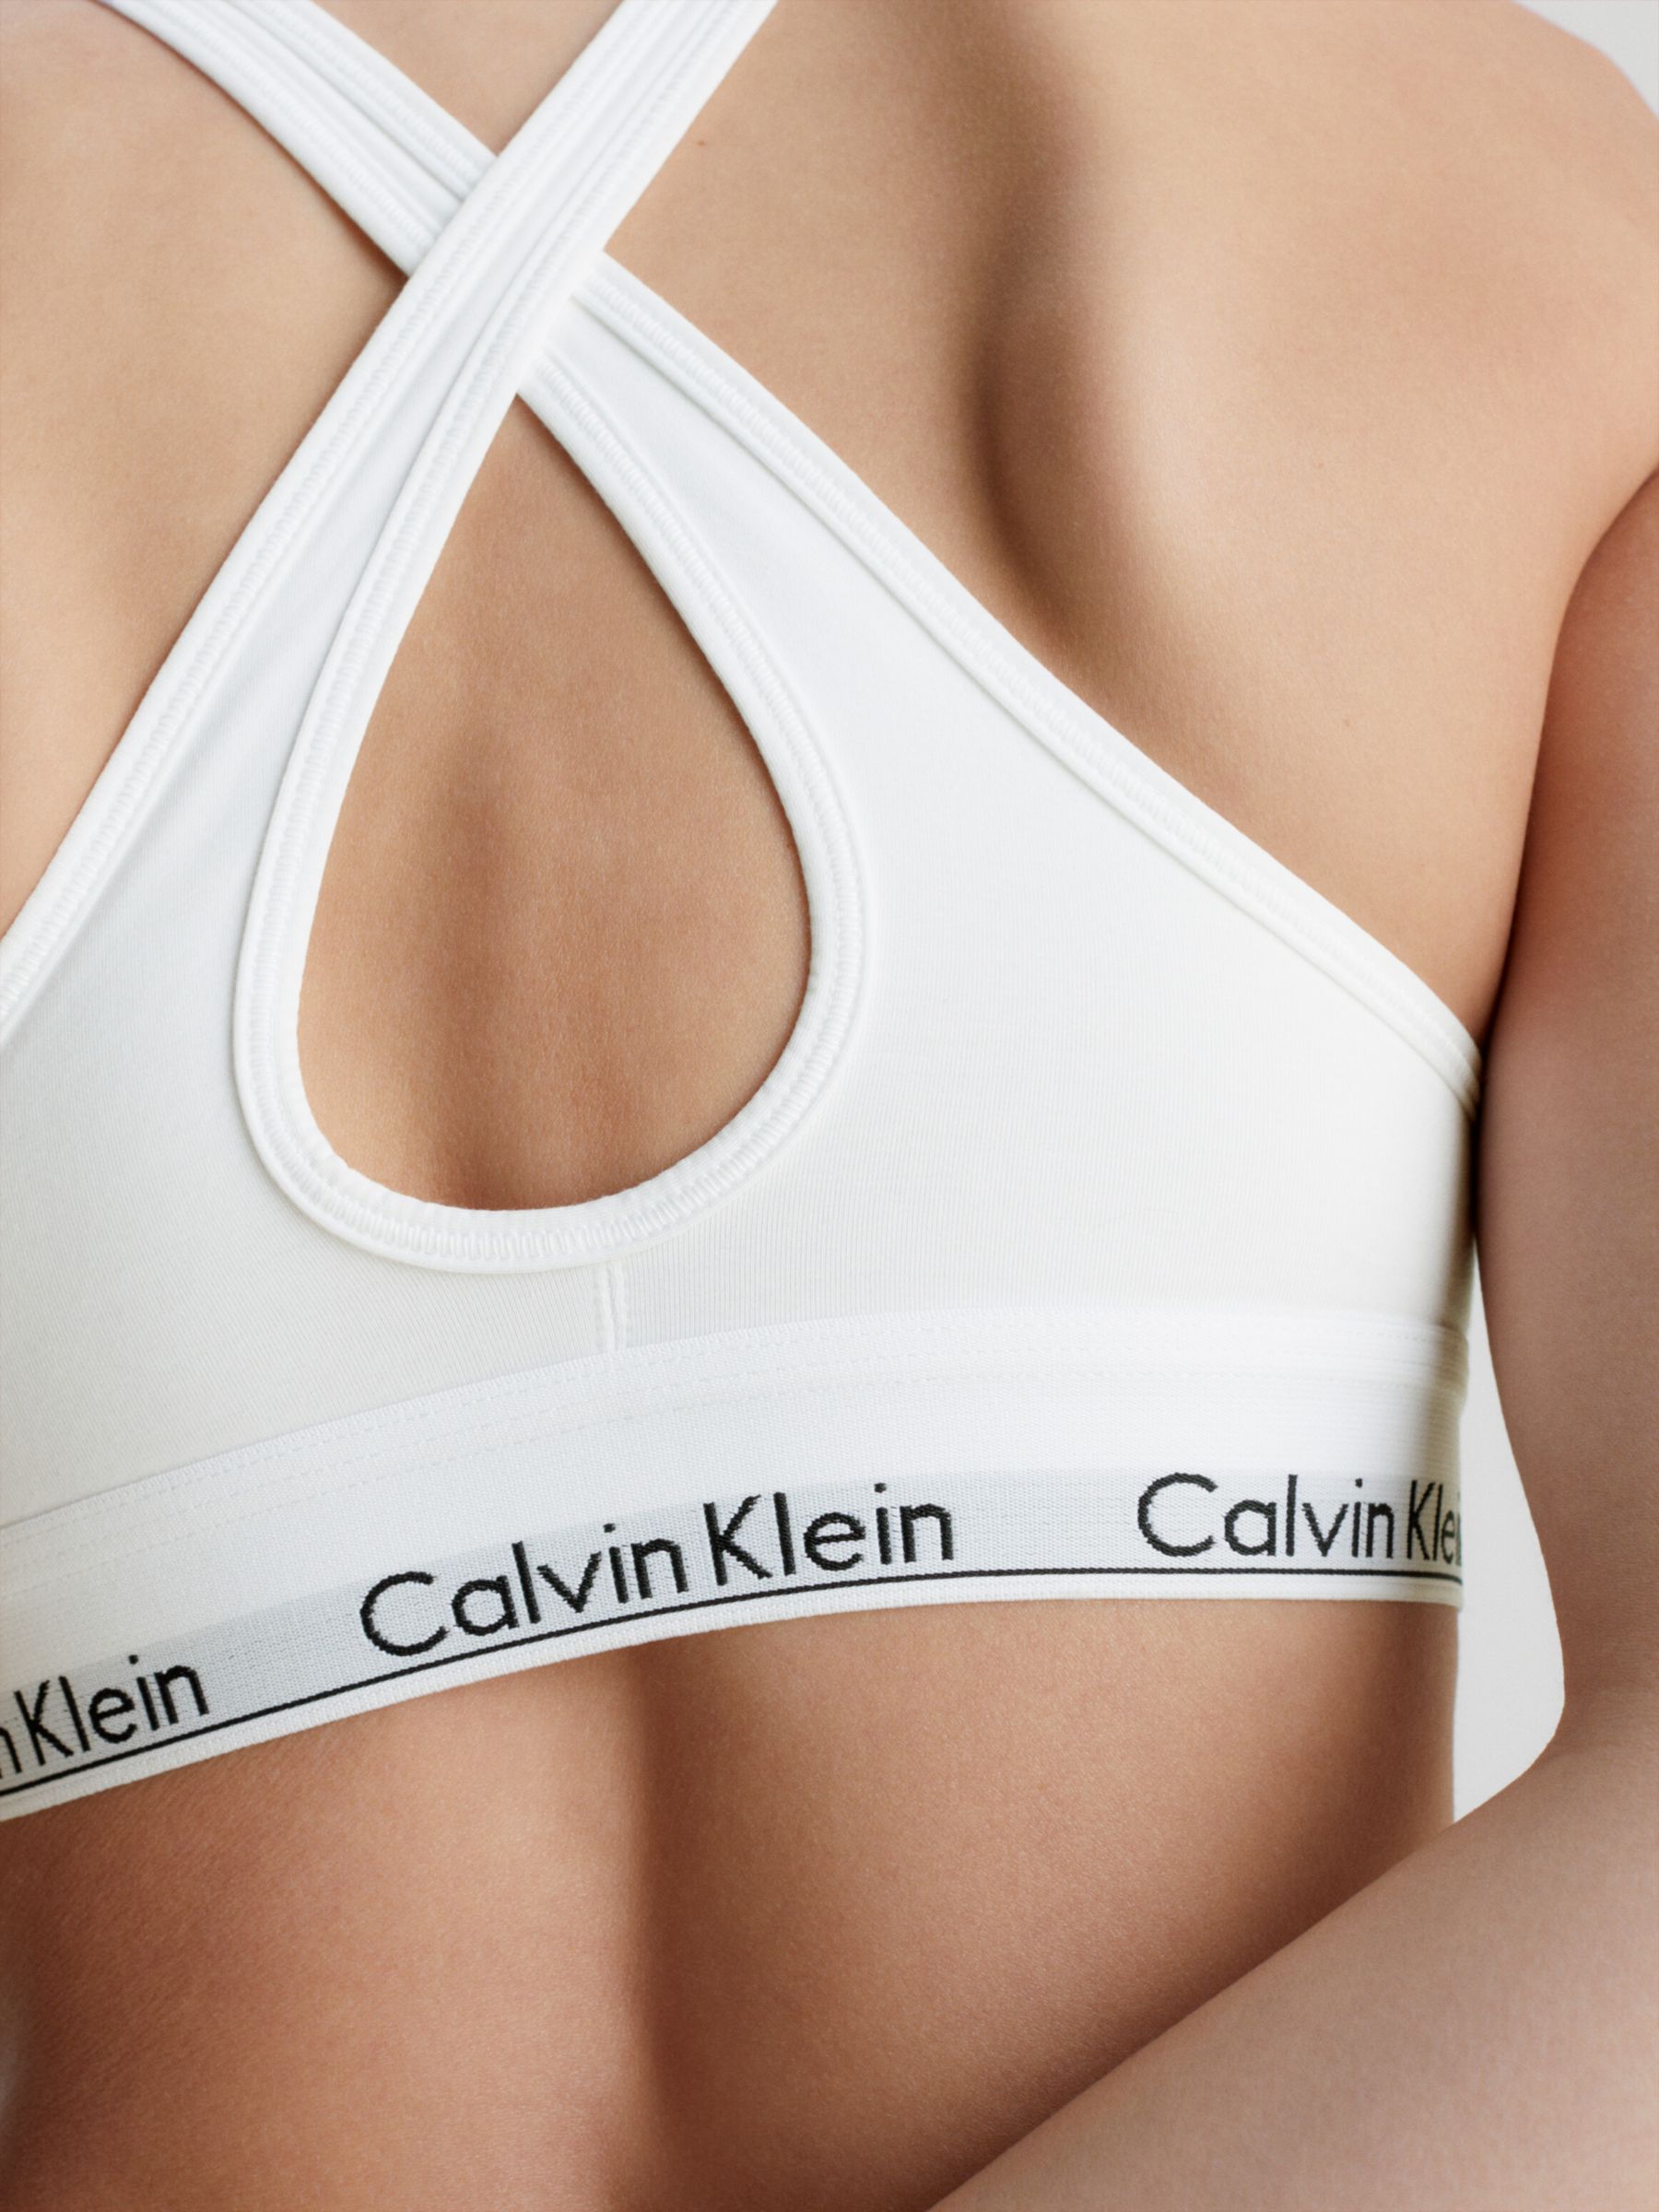 Buy Calvin Klein Women's This is Love Modern Cotton Bikini Panty, Black,  X-Small at